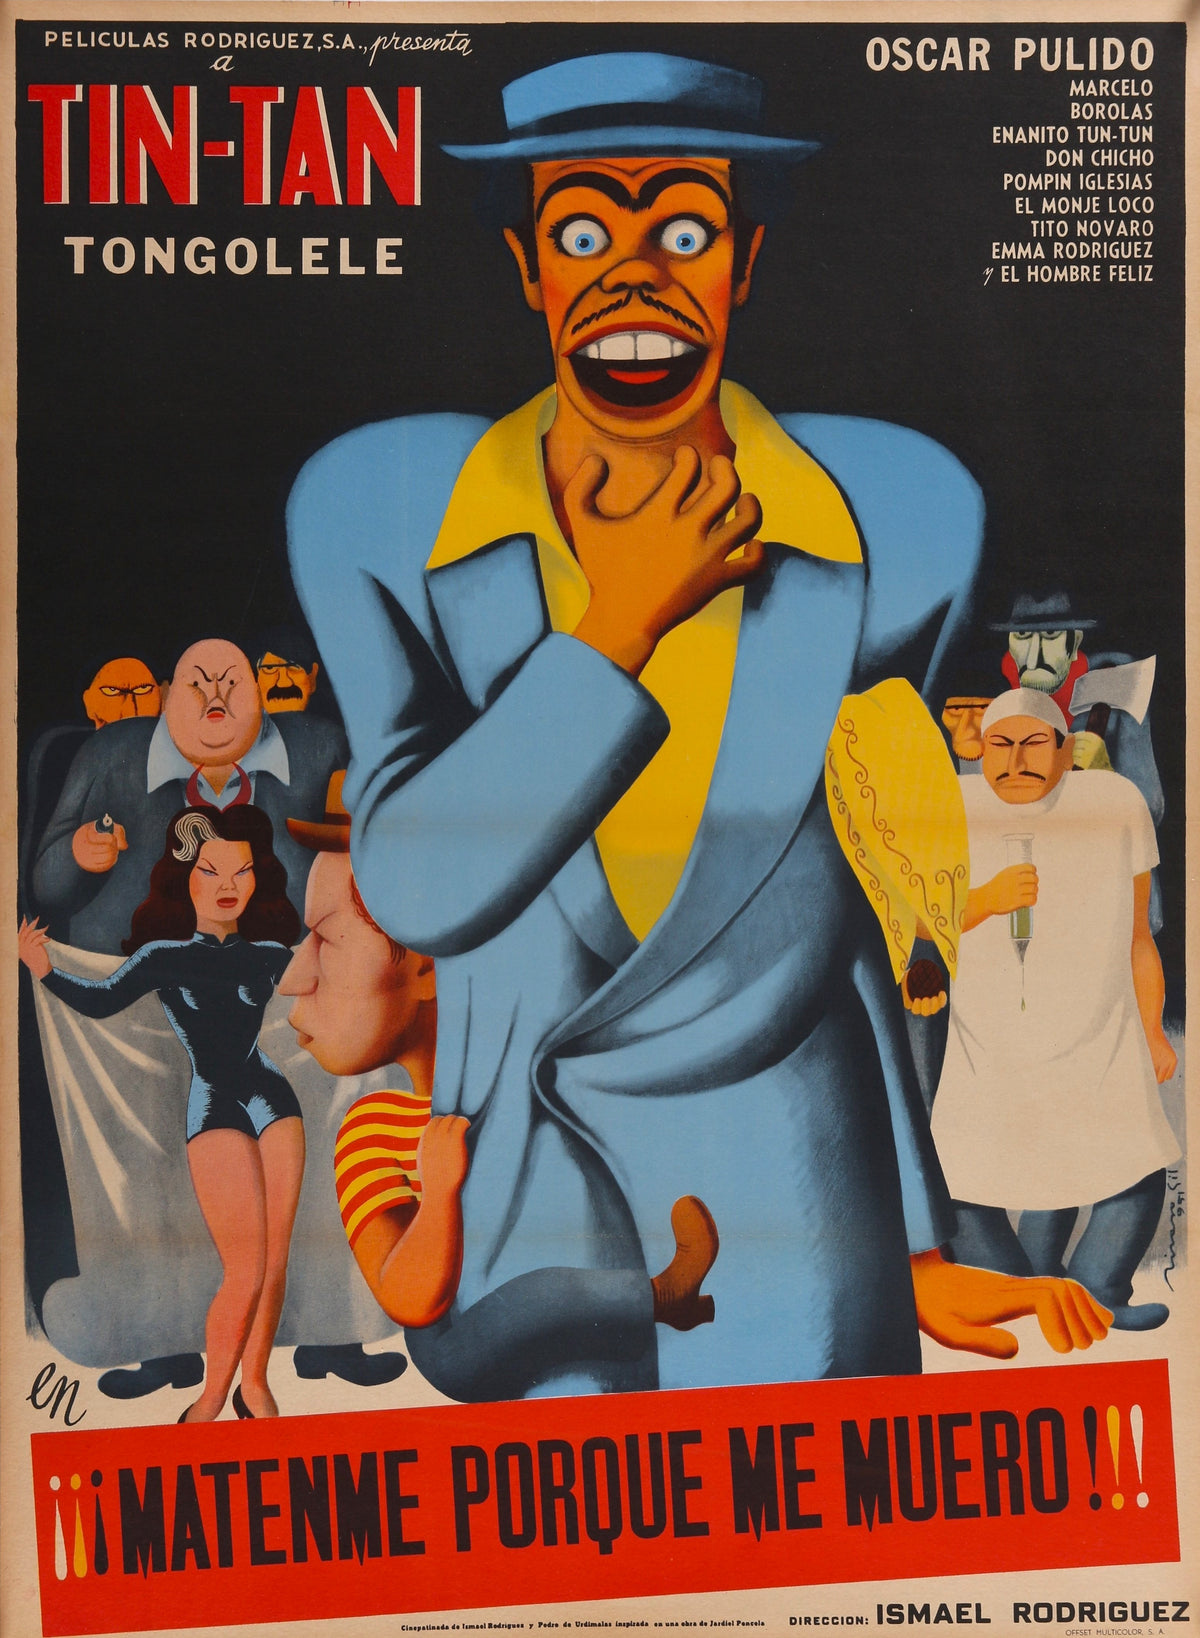 Matenme Porque me Muero- Tin Tan - Authentic Vintage Poster